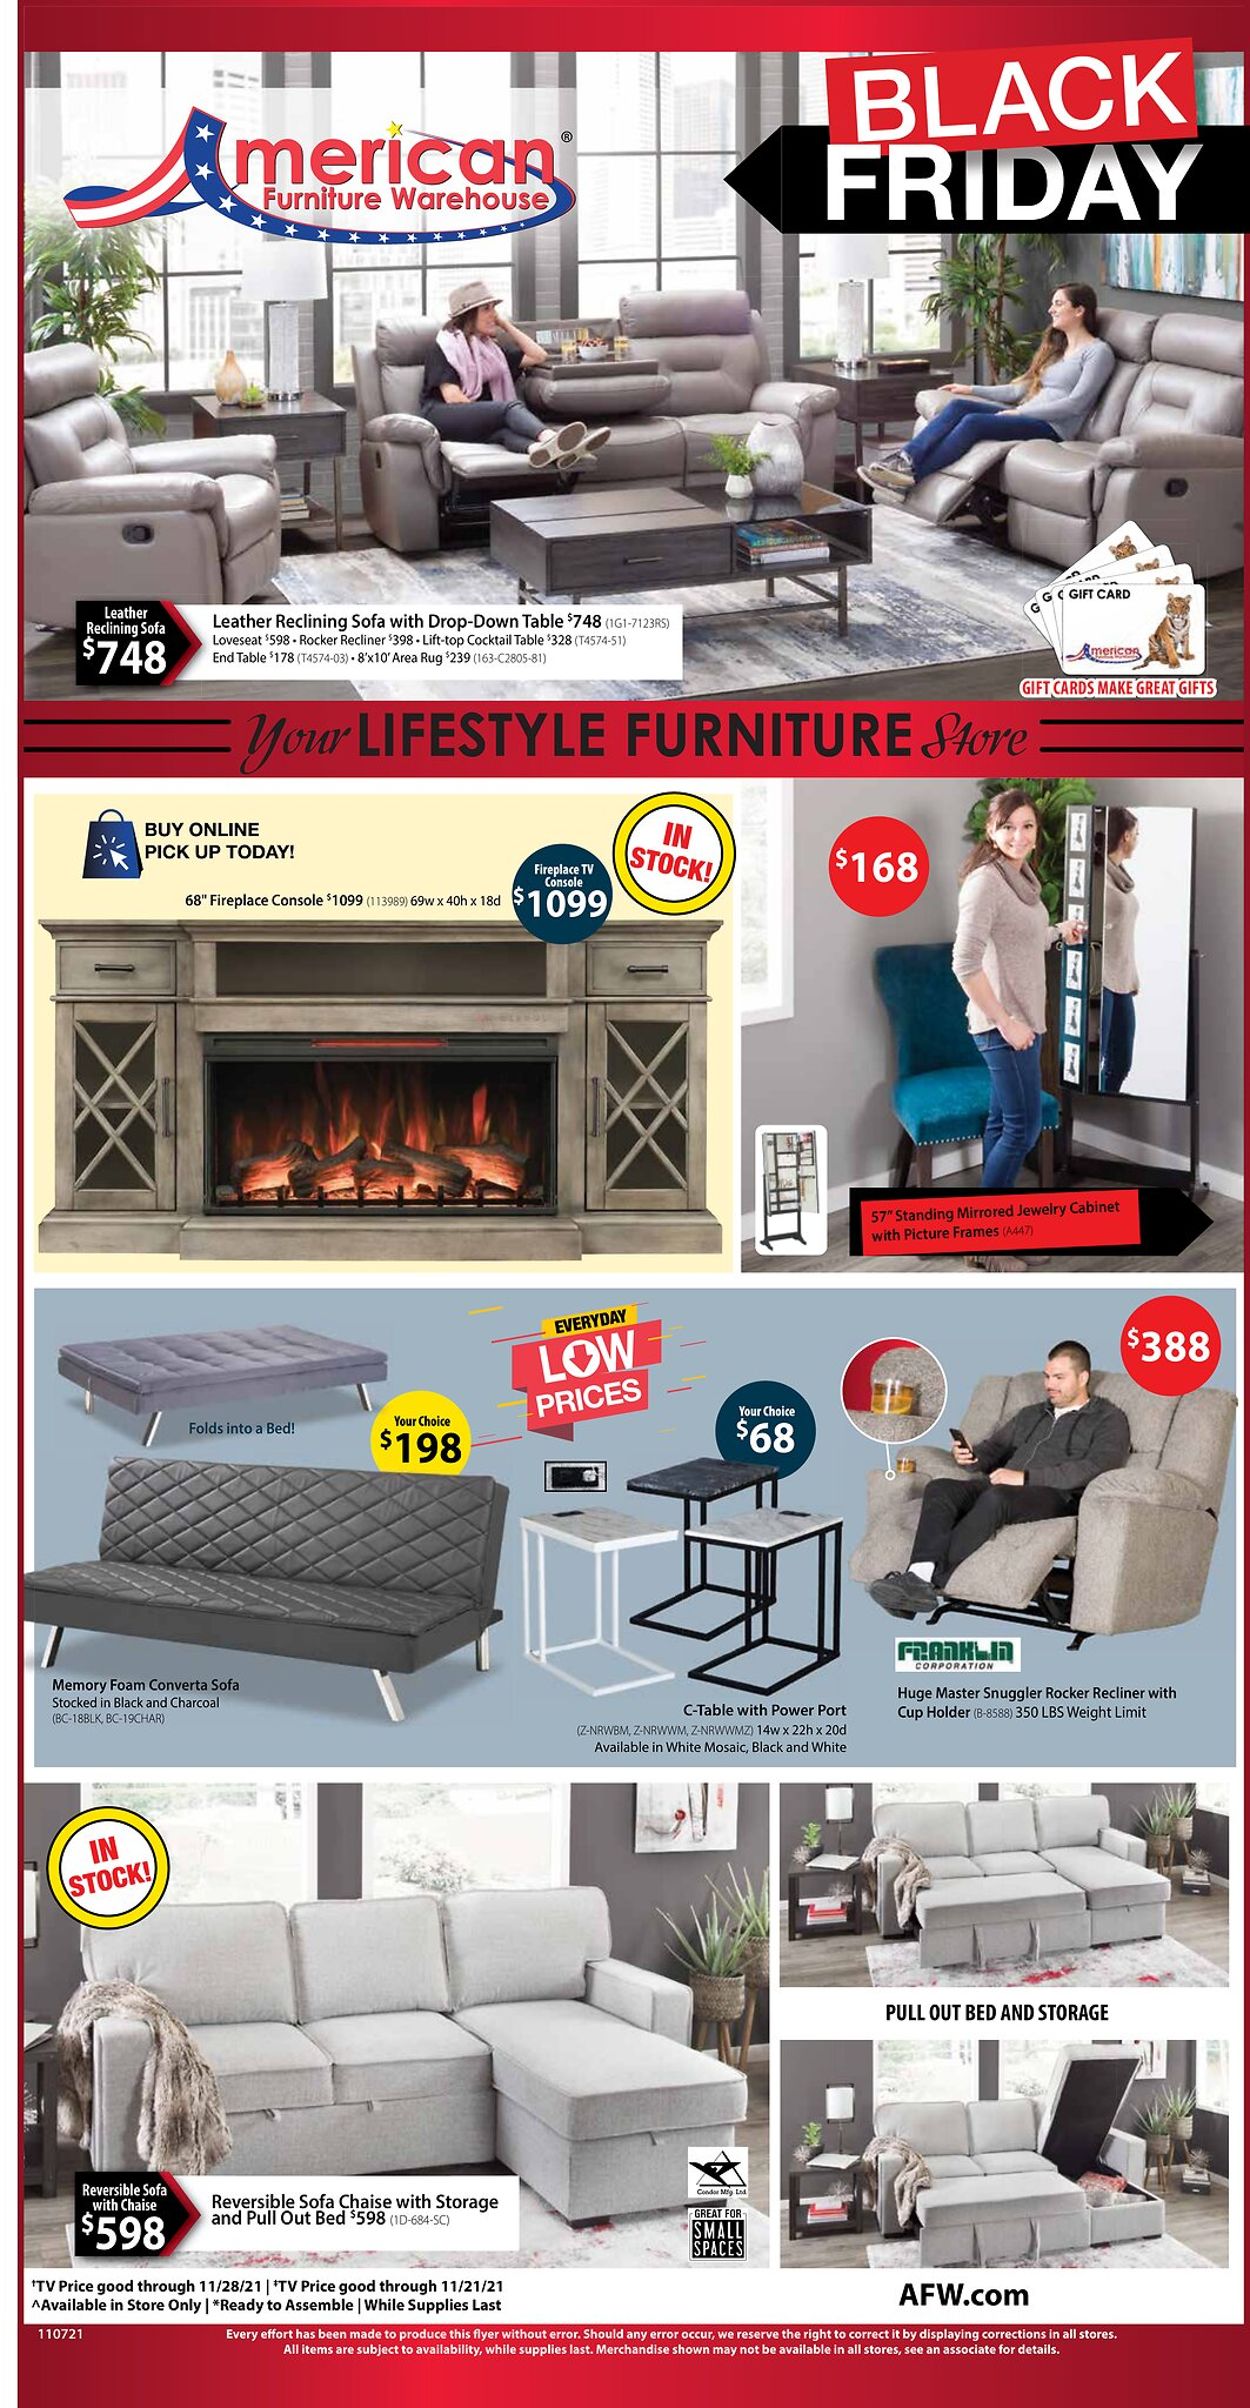 American Furniture Warehouse BLACK FRIDAY WEEK 2021 Current weekly ad